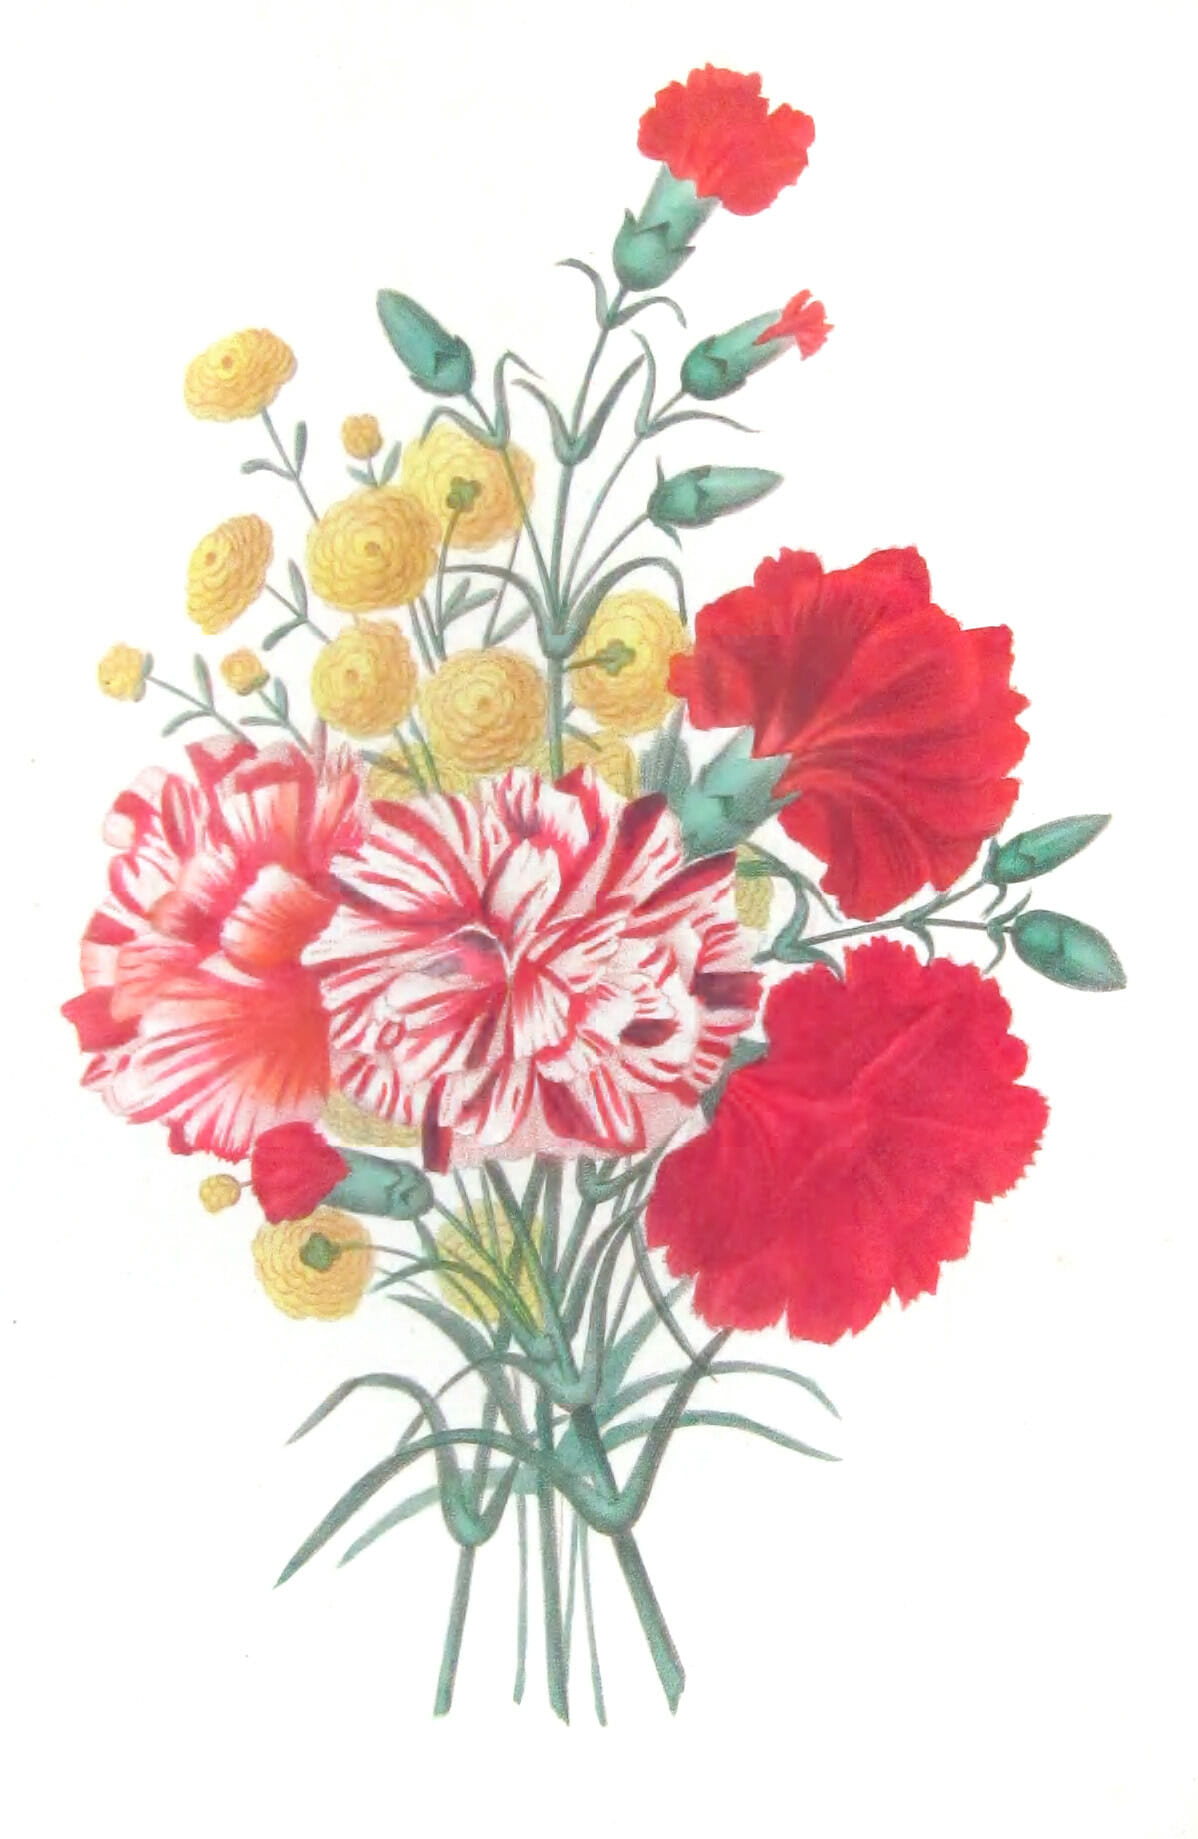 Carnation Aeillet Vintage Flower Illustration - Free Vintage Illustrations